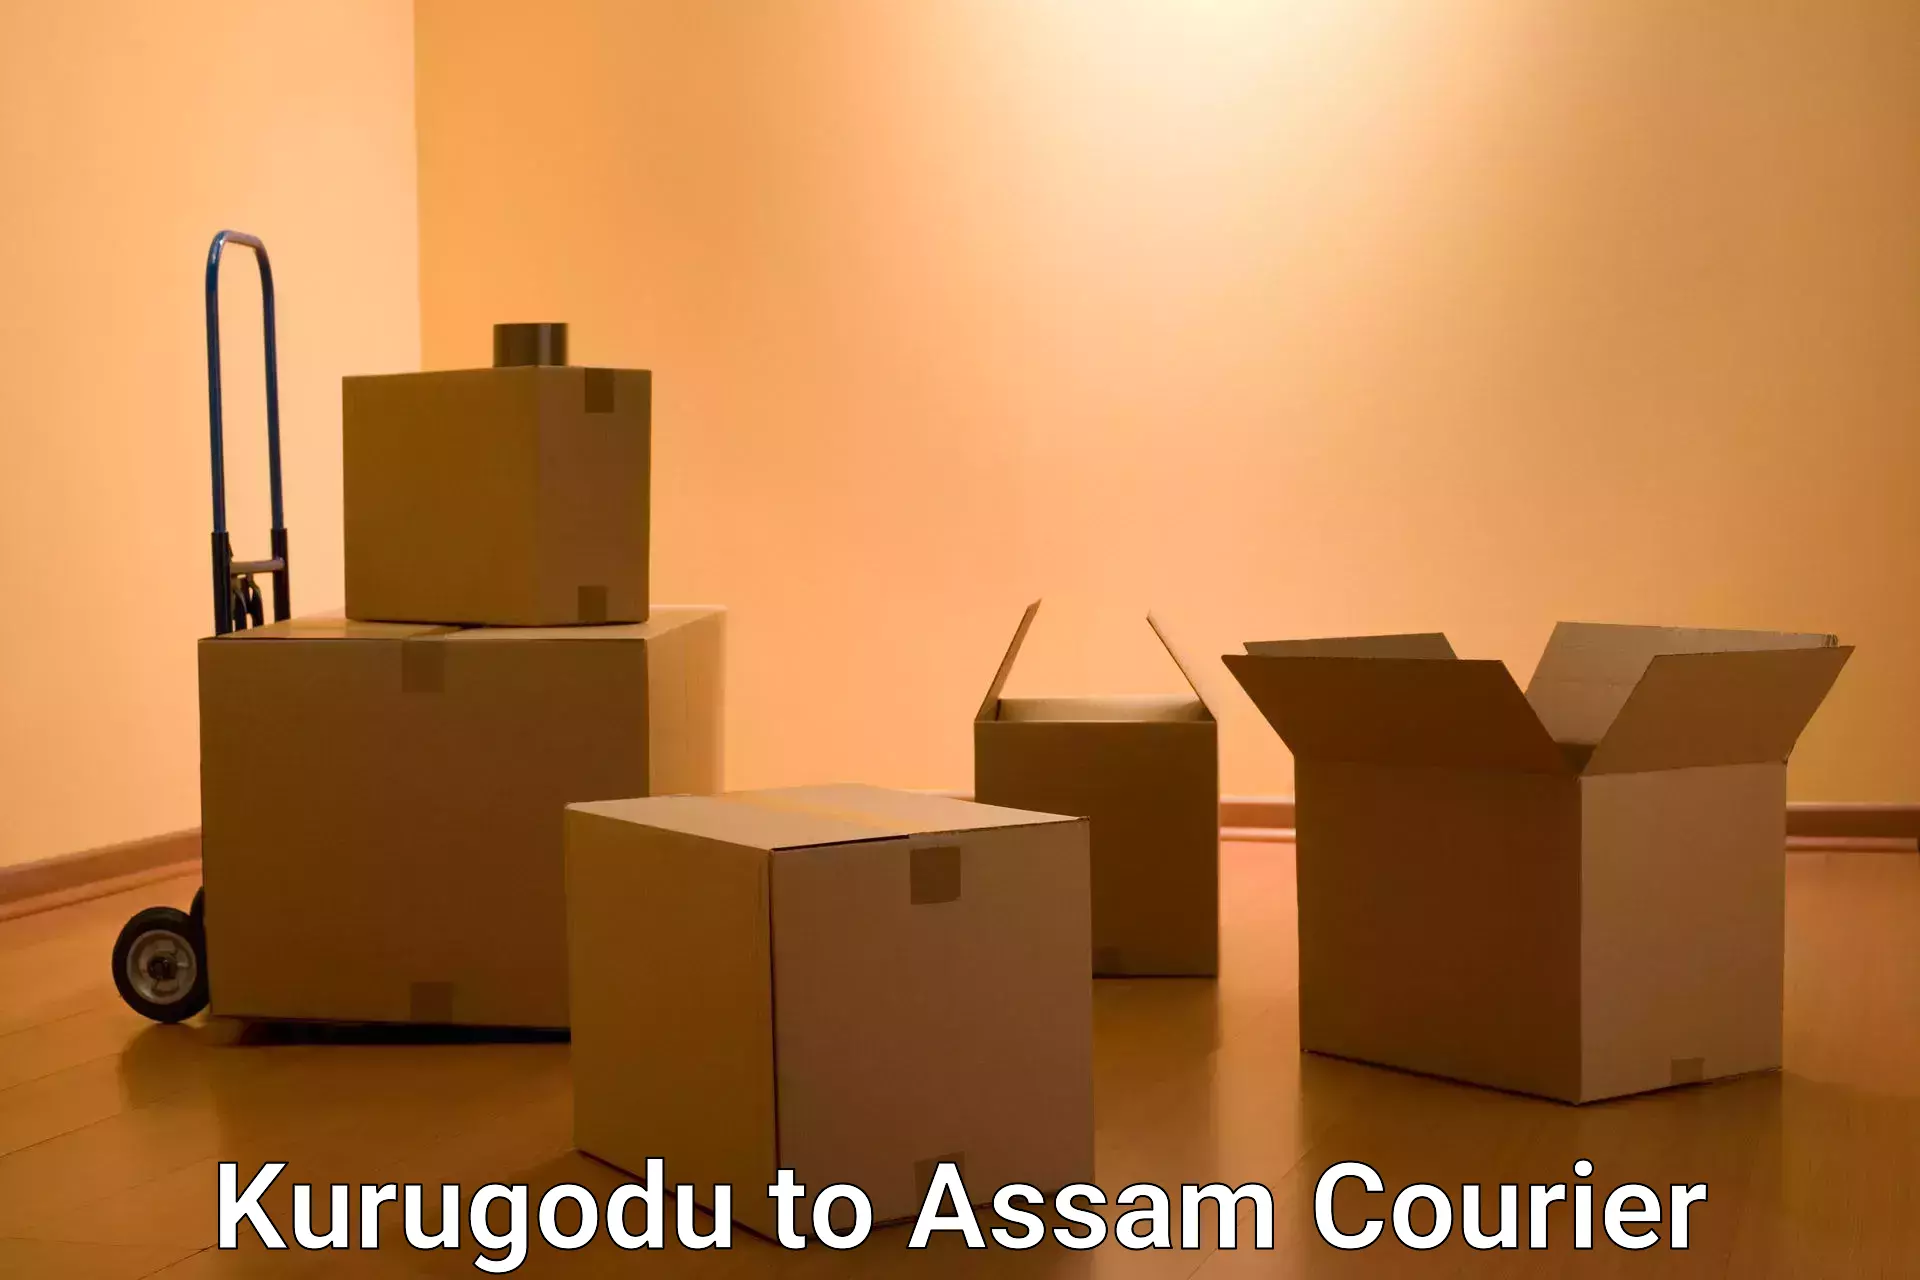 State-of-the-art courier technology Kurugodu to Assam